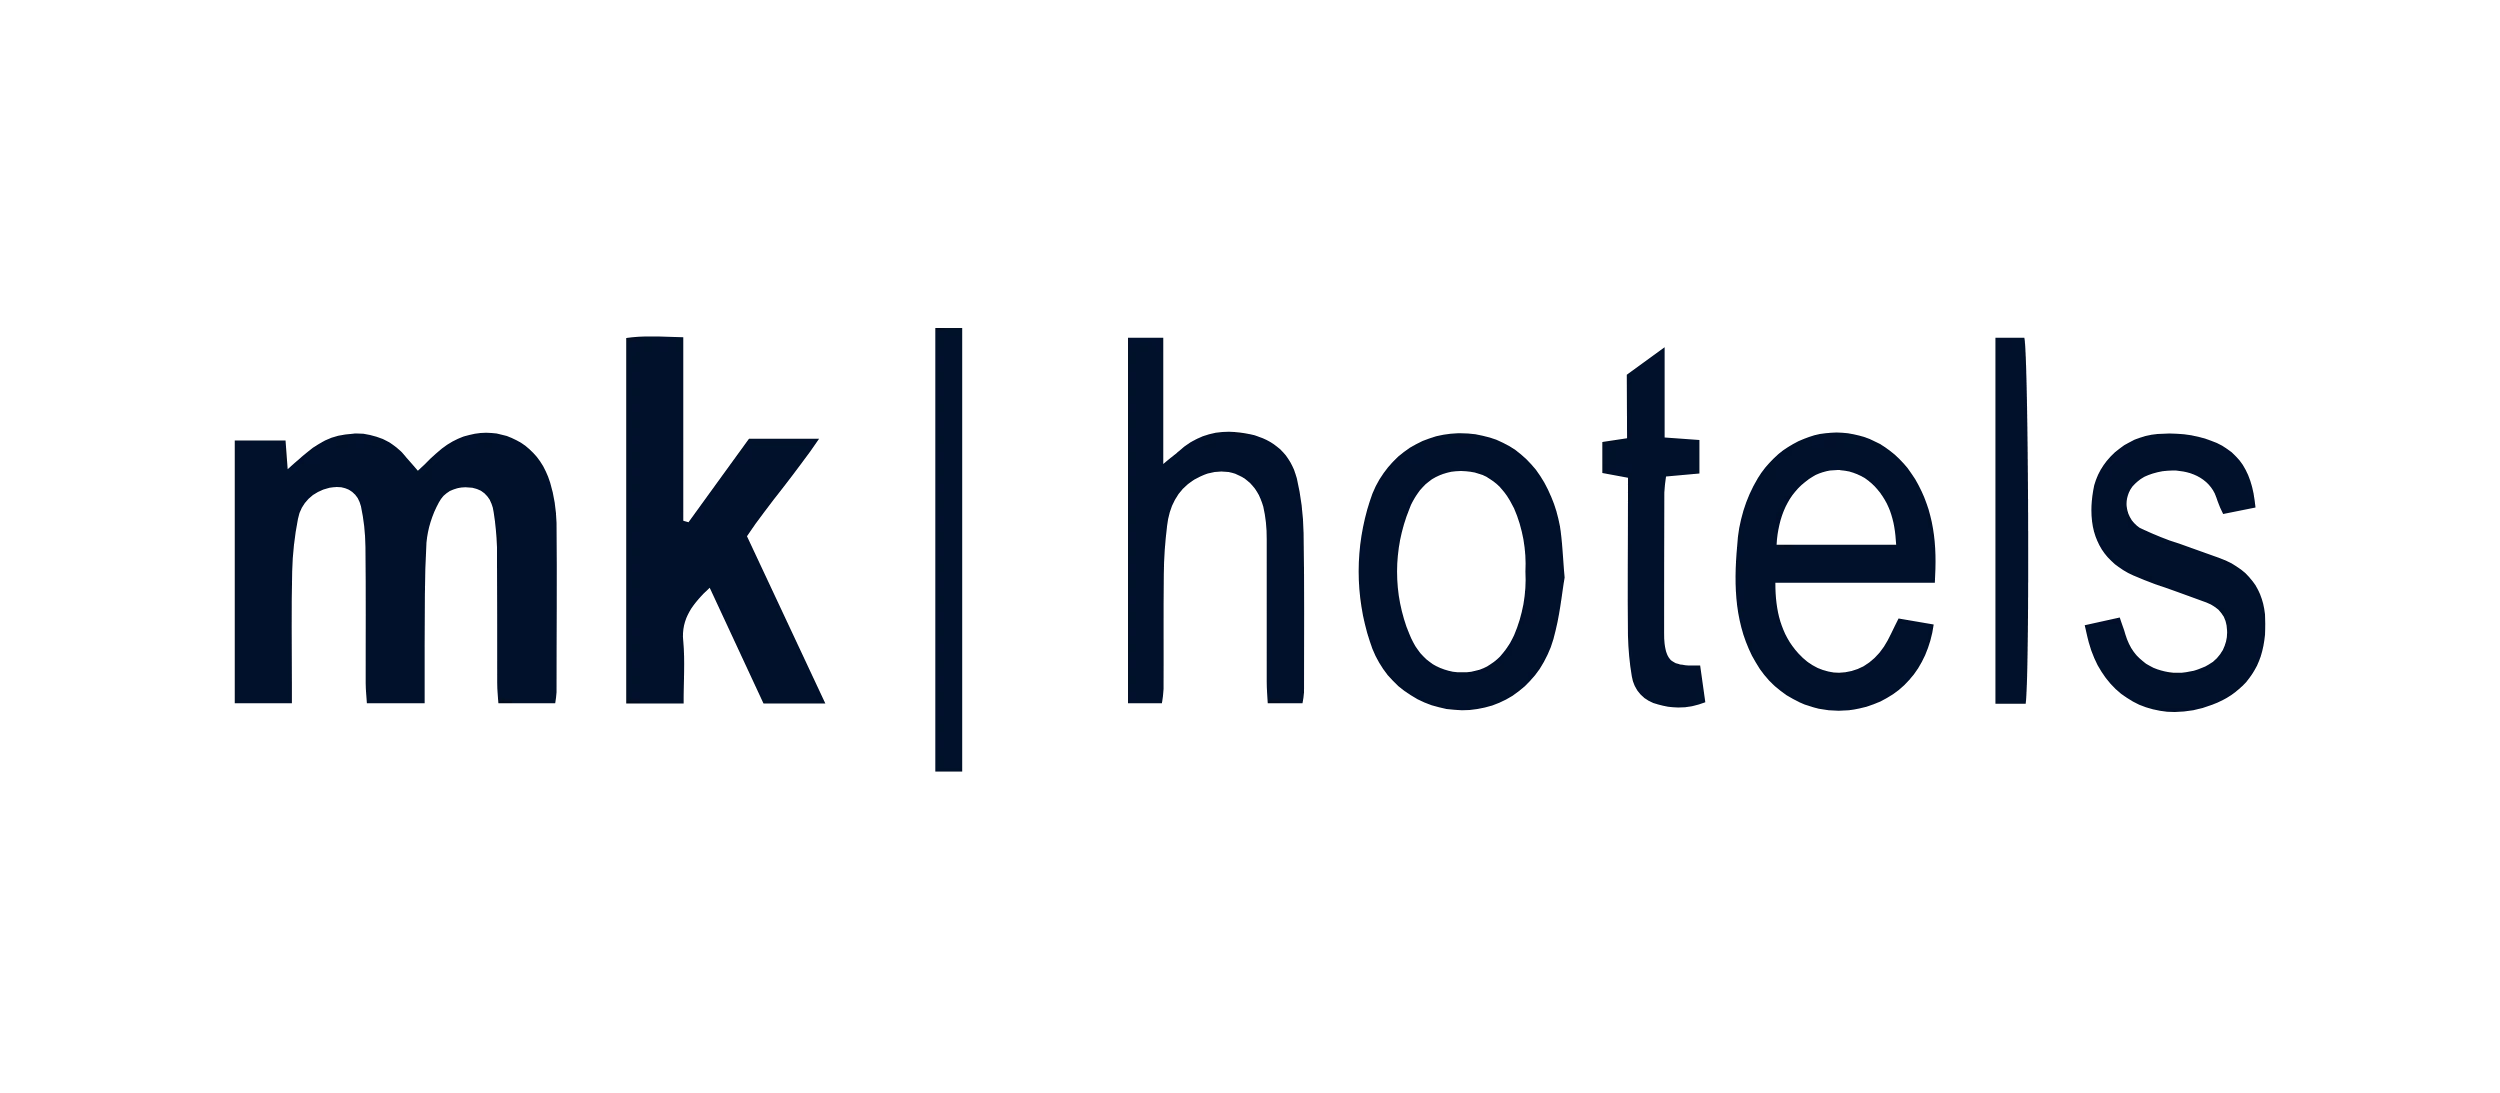 MK Hotels logo